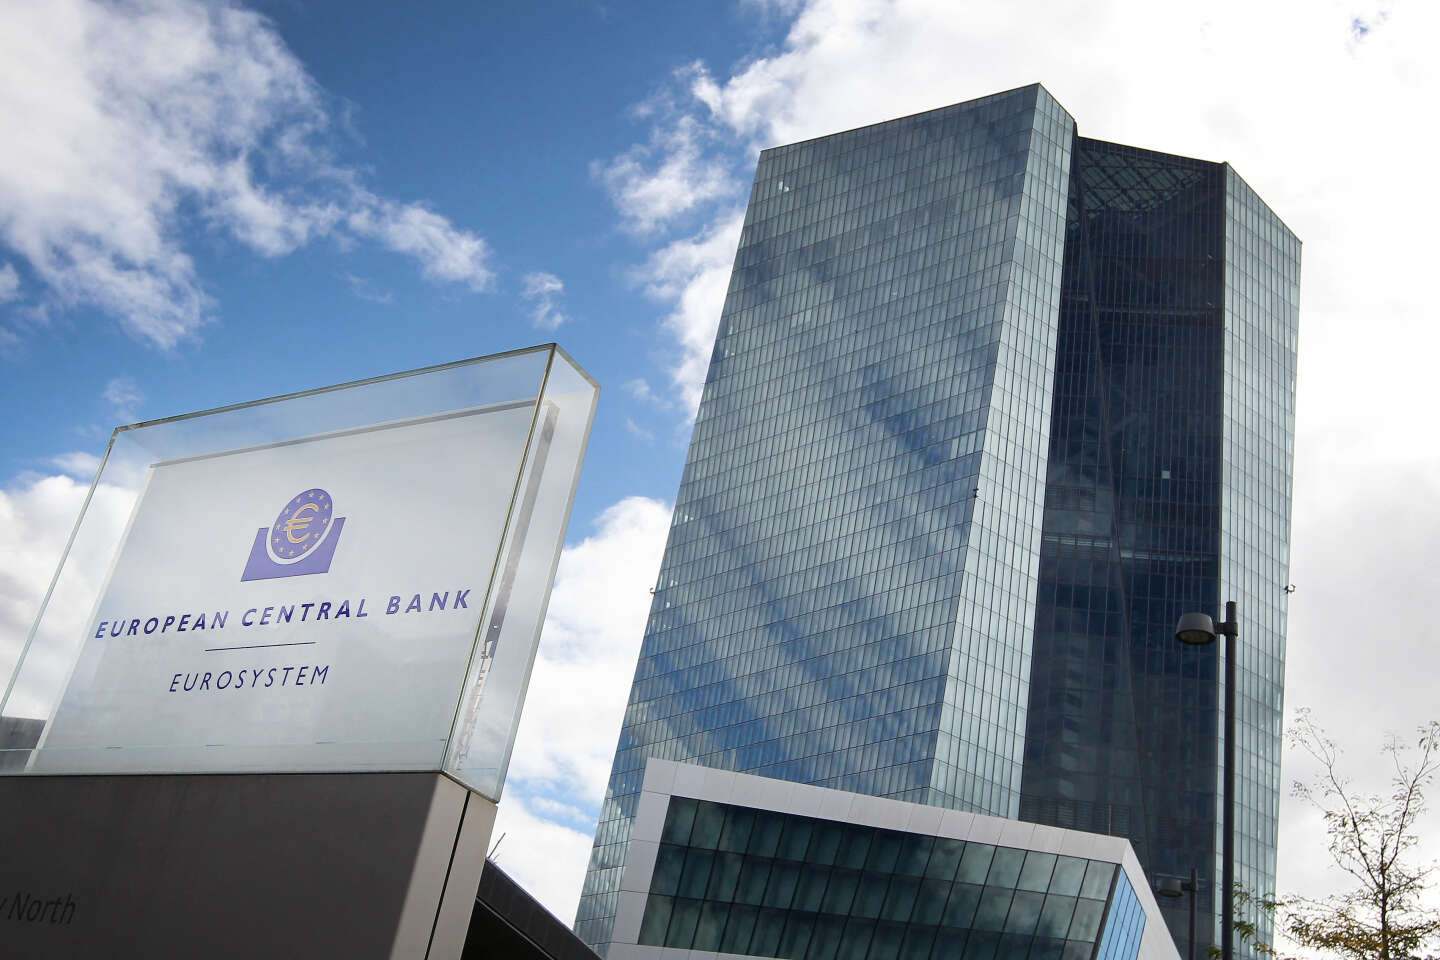 Central banks, an increasingly active bulwark against financial market failures